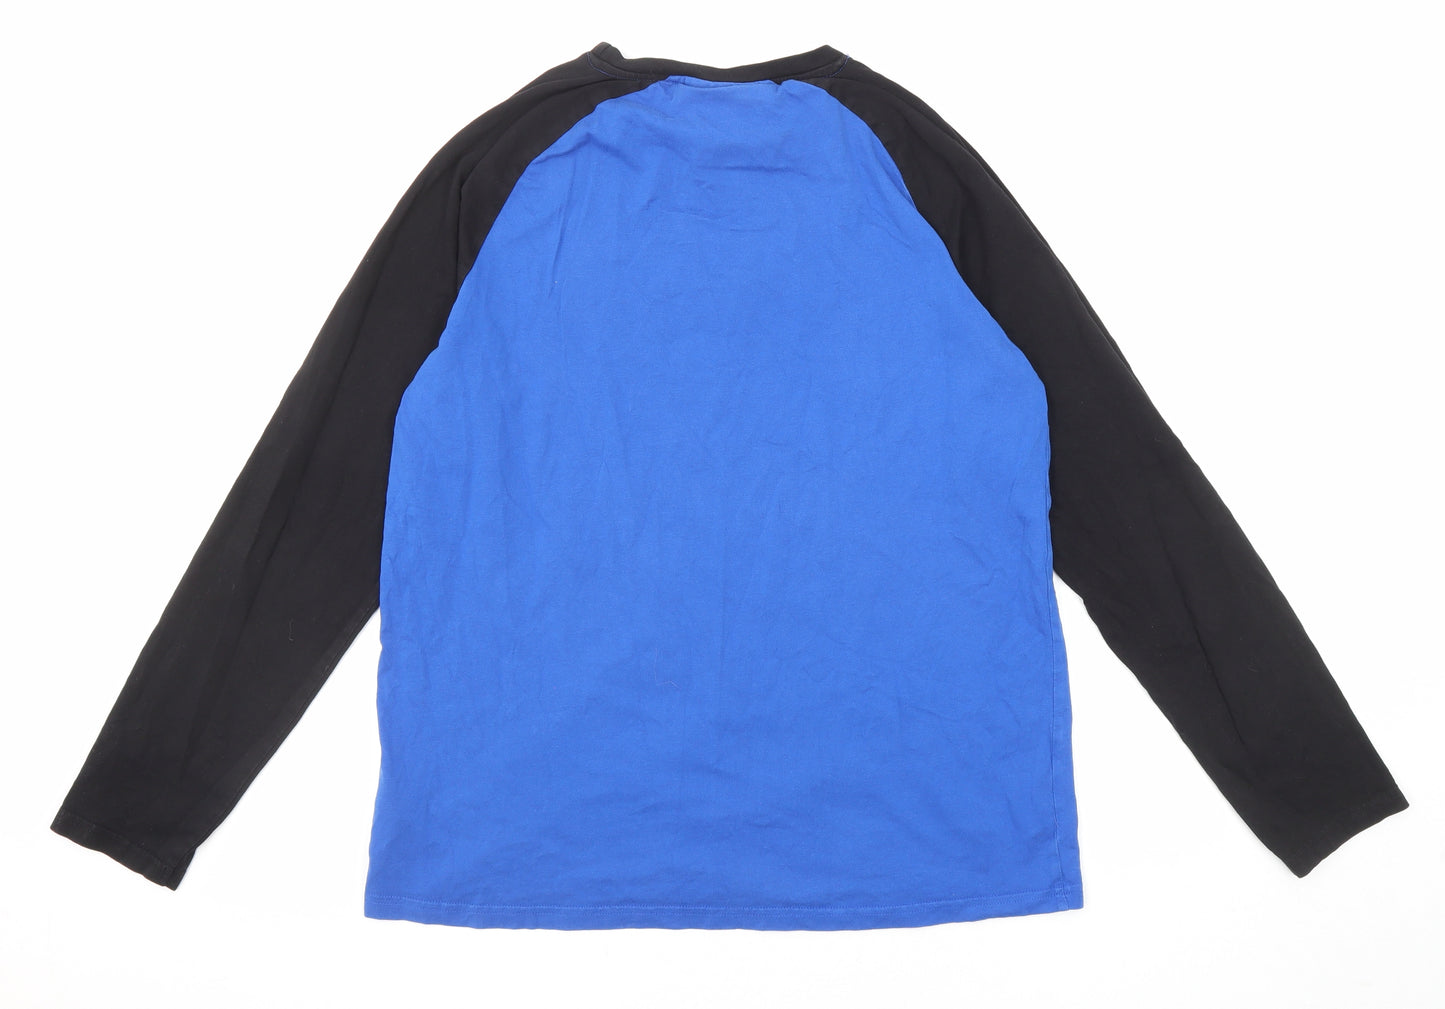 Nautica Mens Blue Colourblock Cotton T-Shirt Size L Crew Neck